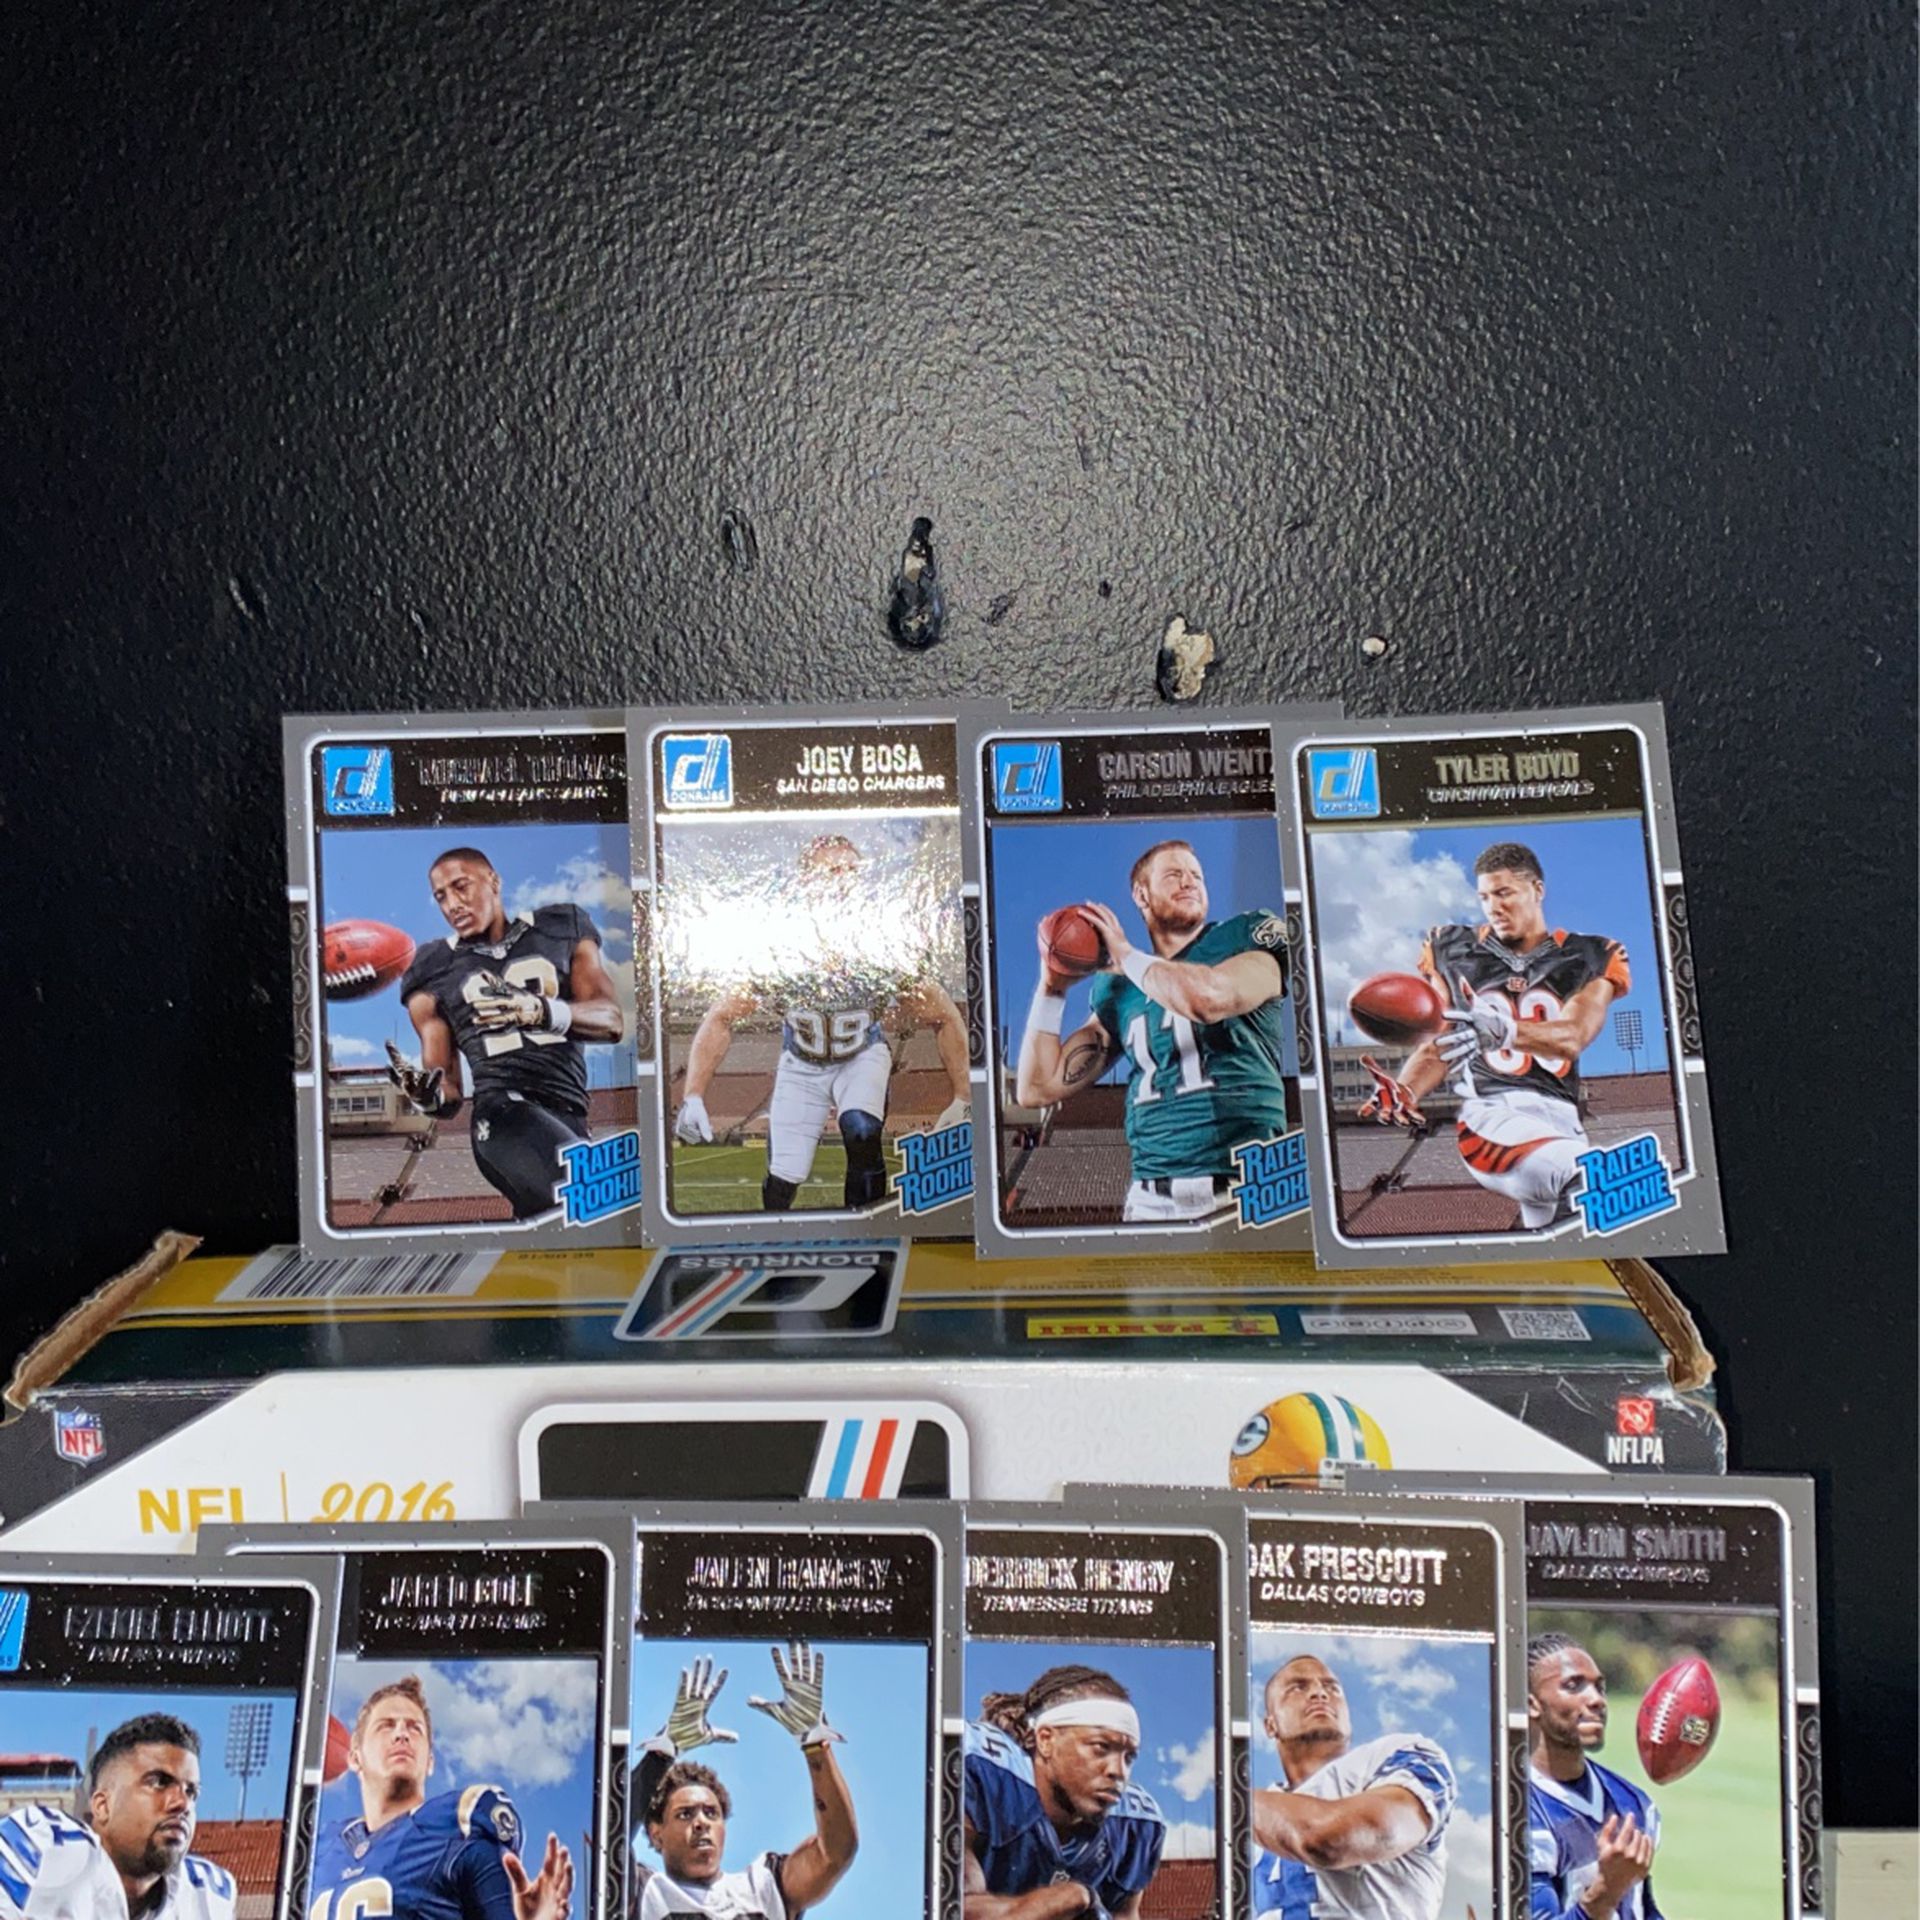 Complete Donruss 2016 NFL 400pc Trading Card Set